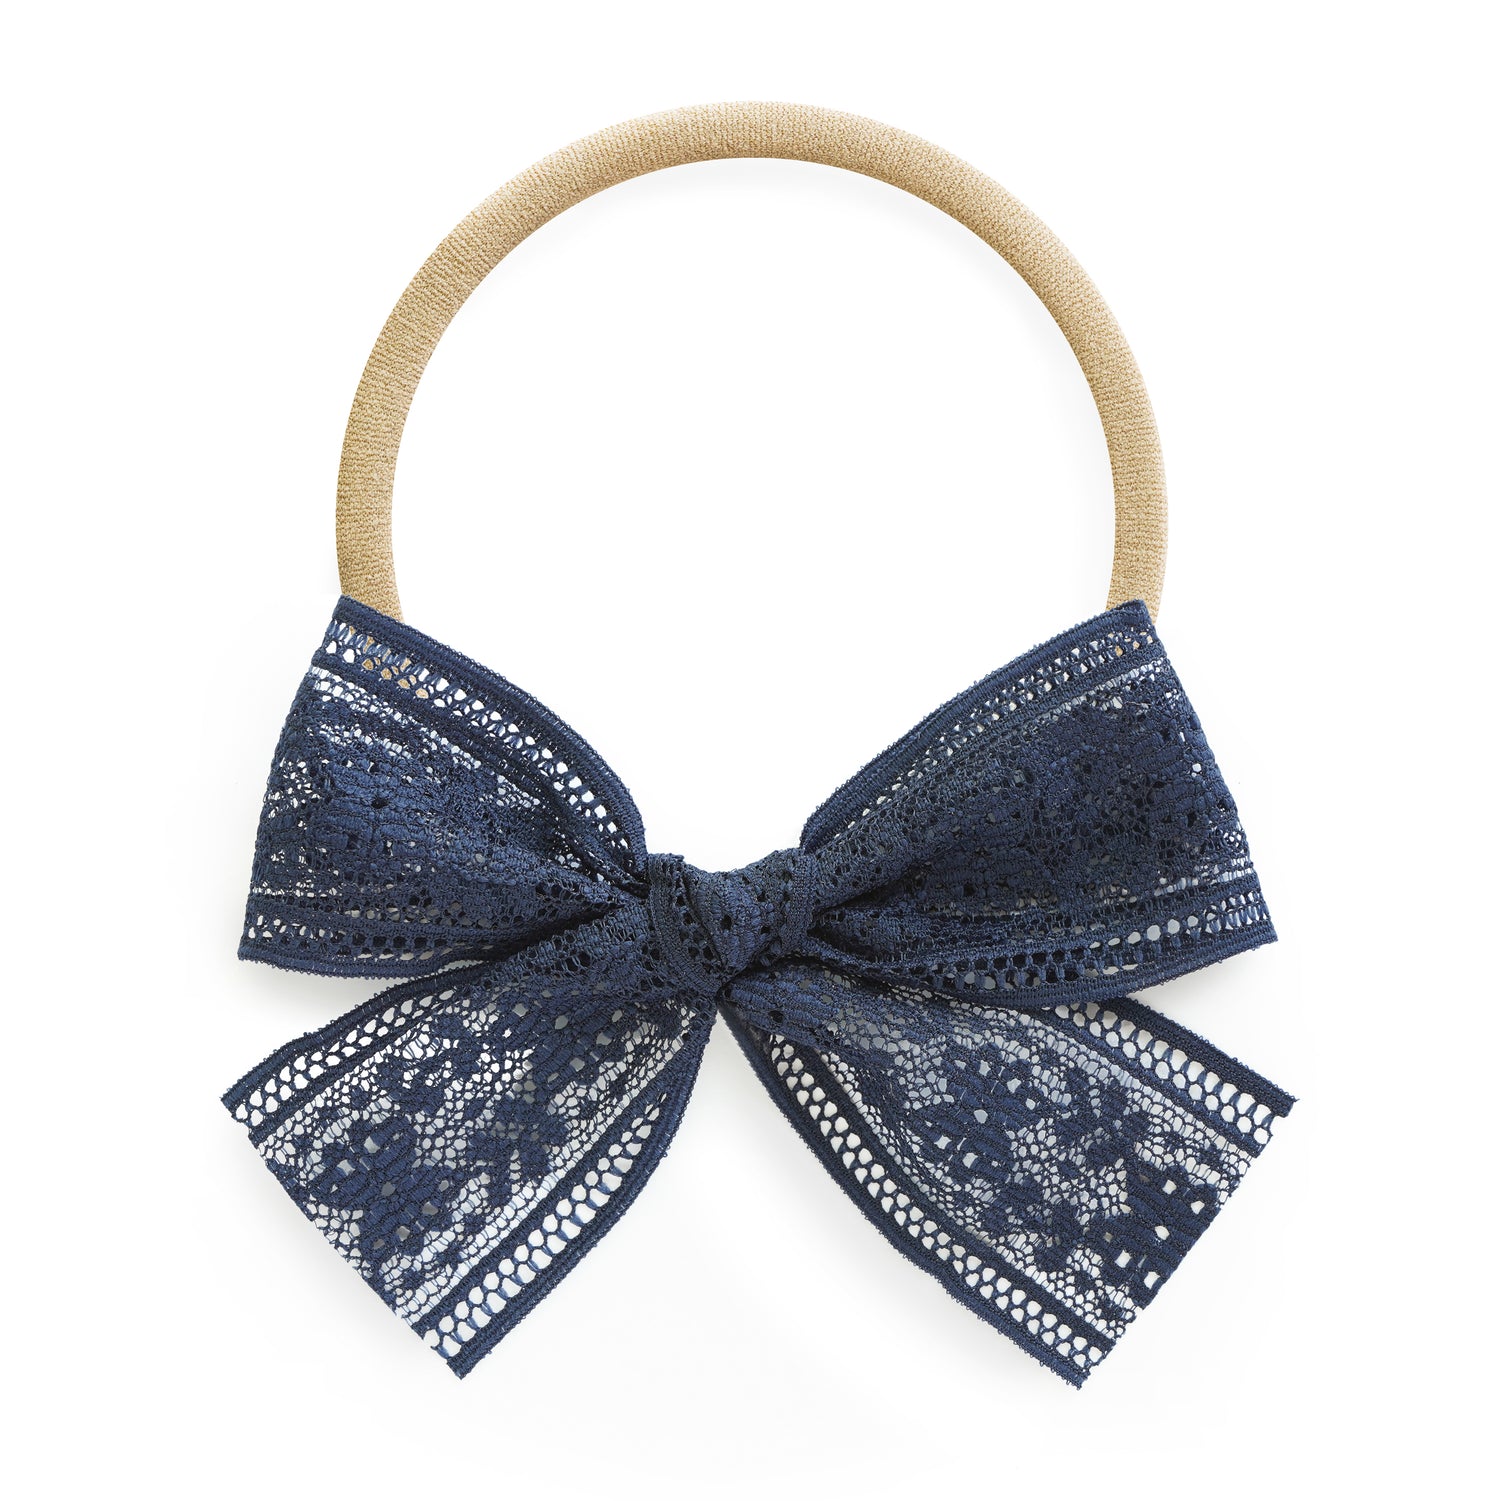 stretch baby headband with lace bow navy dark blue Audrey